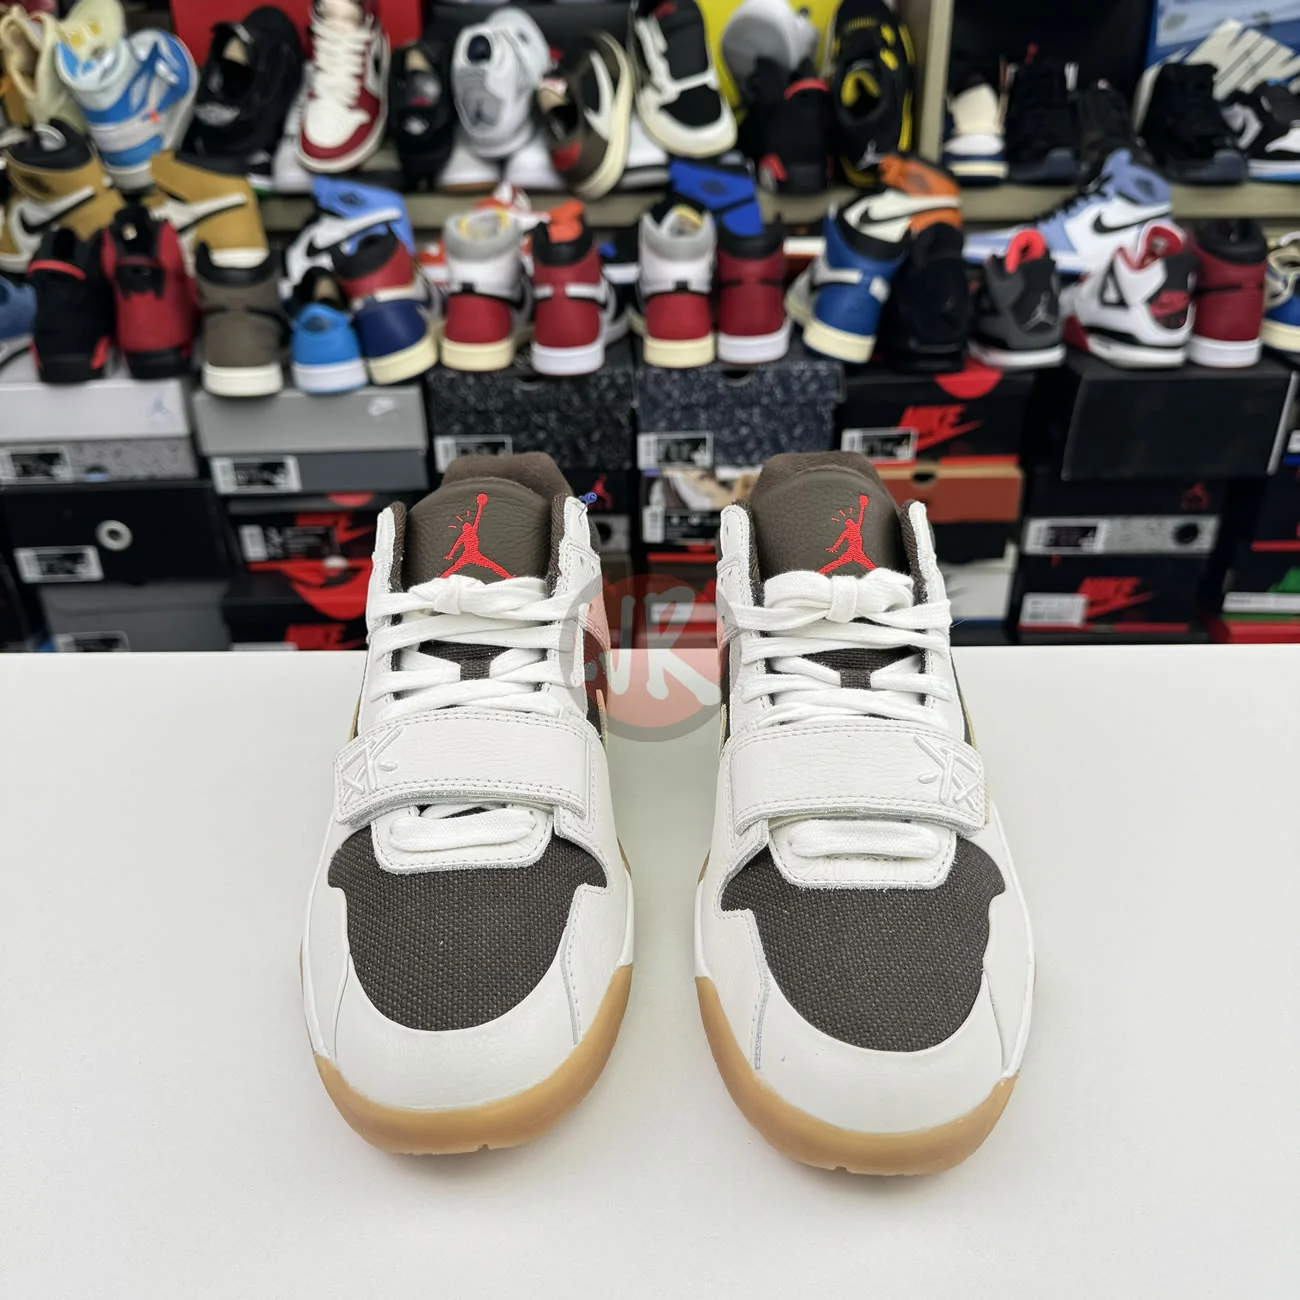 Travis Scott X Jordan Cut The Check Trainer Release Date Ljr Sneakers (9) - bc-ljr.net